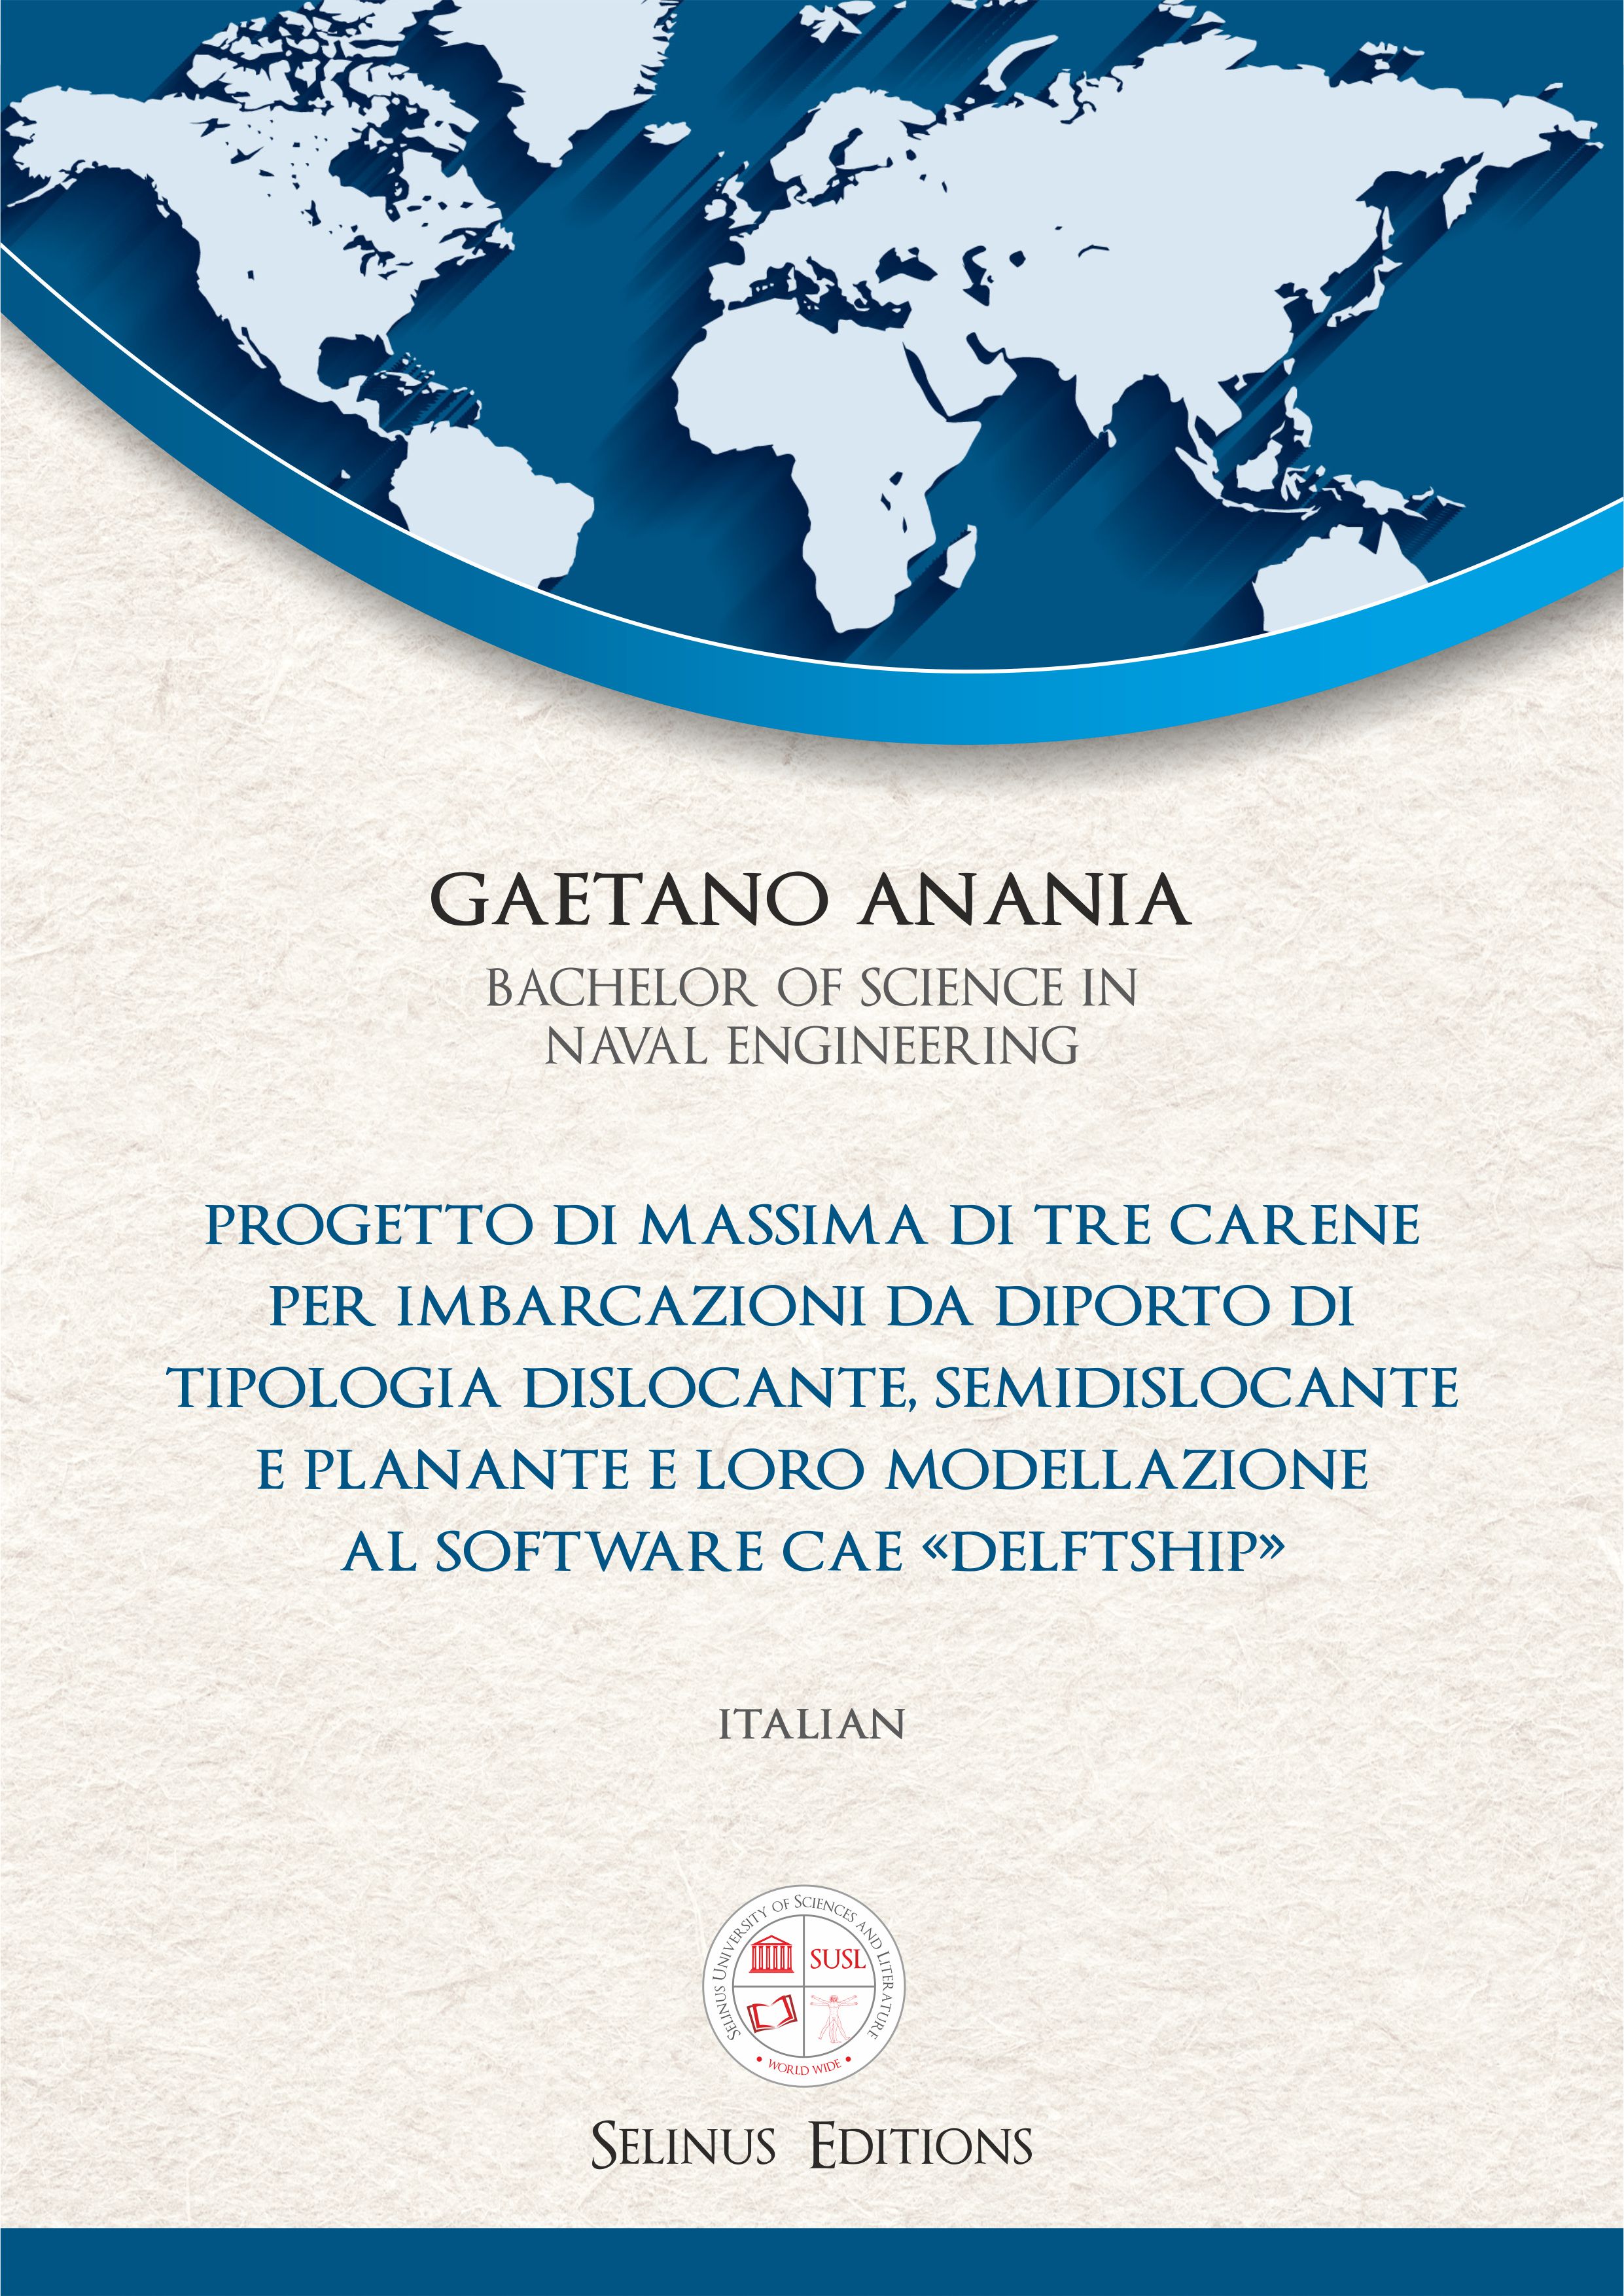 Thesis Gaetano Anania